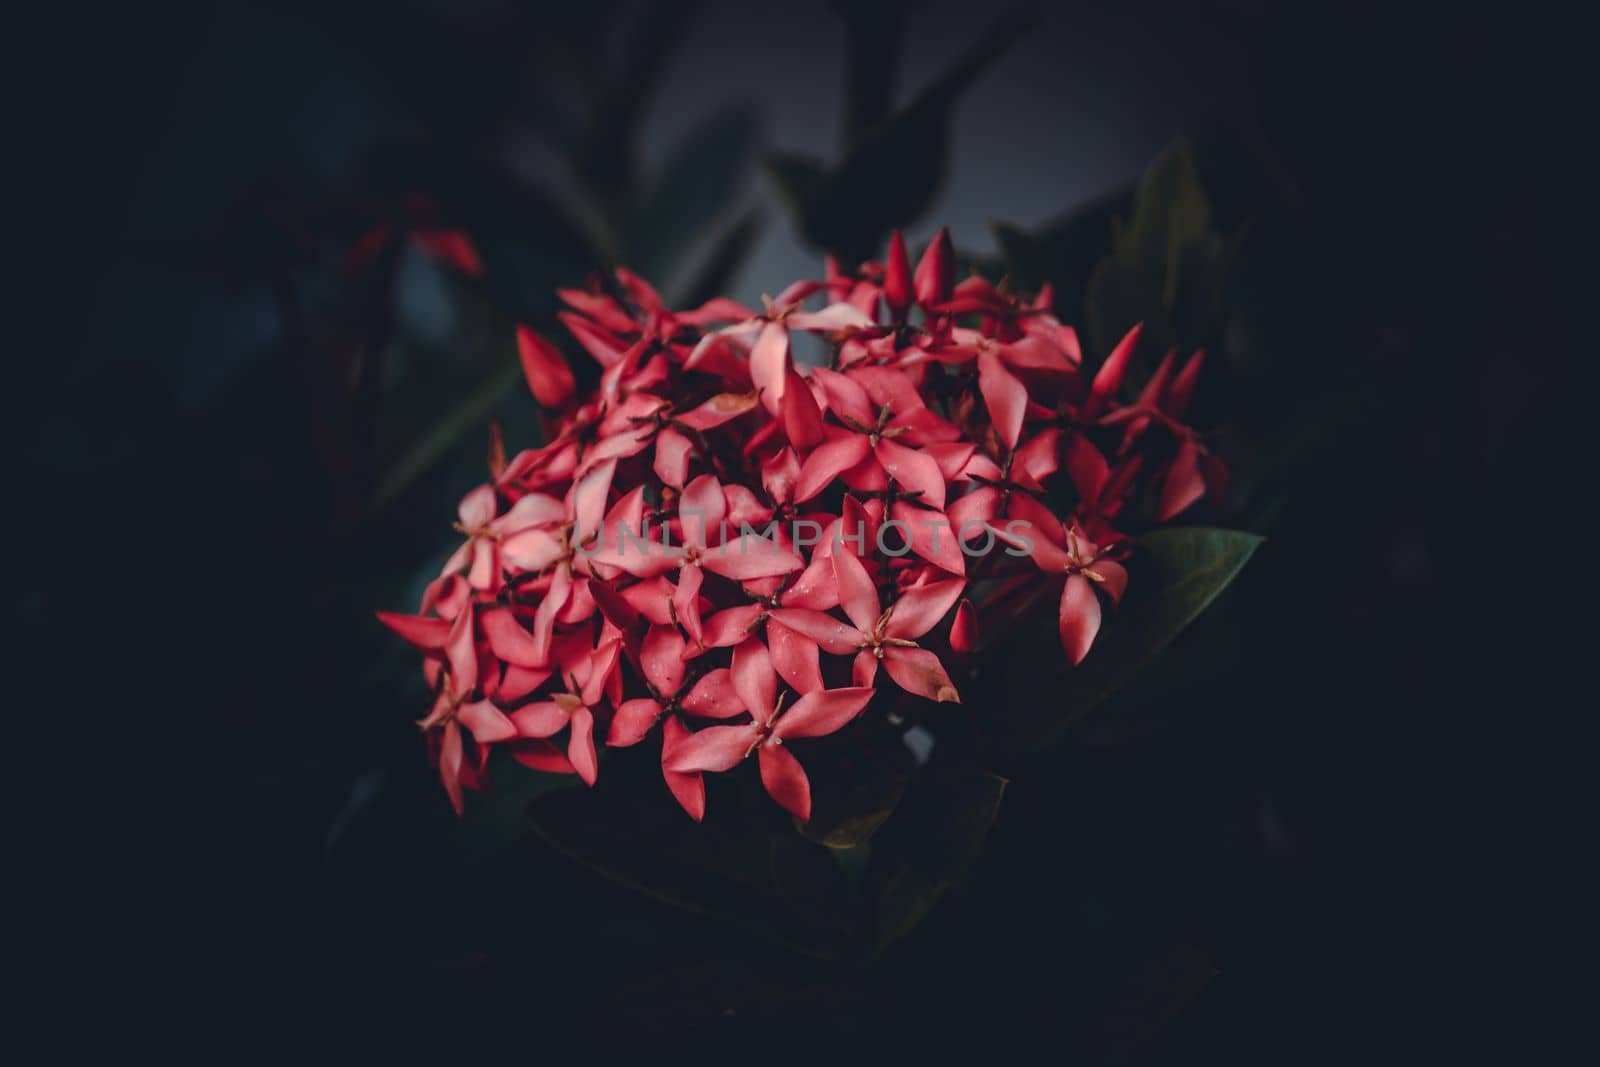 Chinese ixora, Ixora chinensis, West Indian Jasmine flower, selective focus, blur background